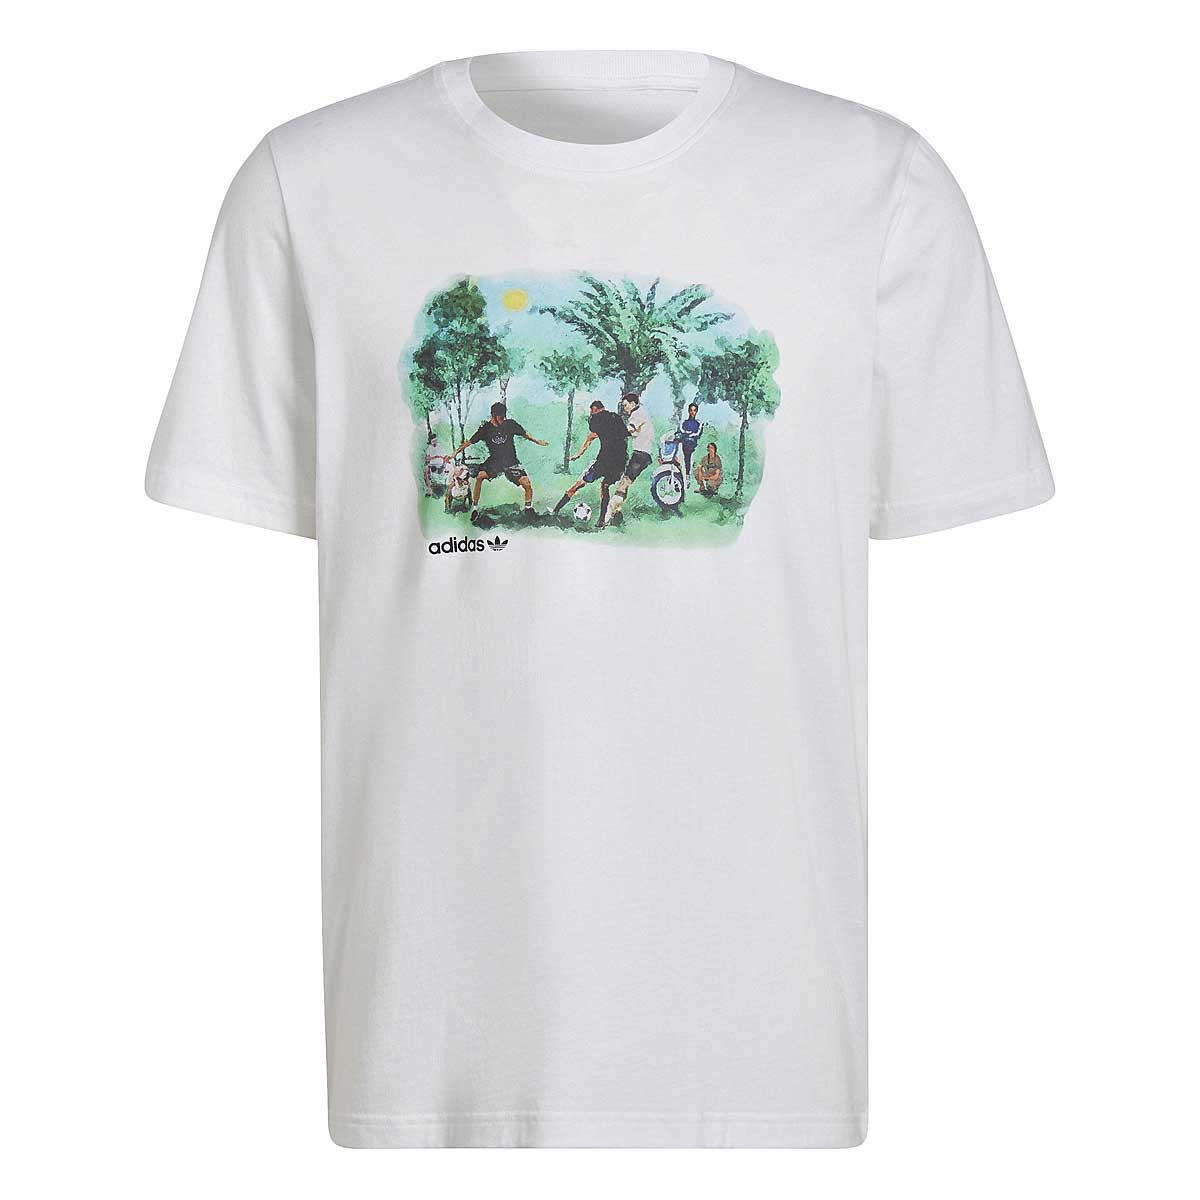 Adidas Originals Sprt Summer T-Shirt, White